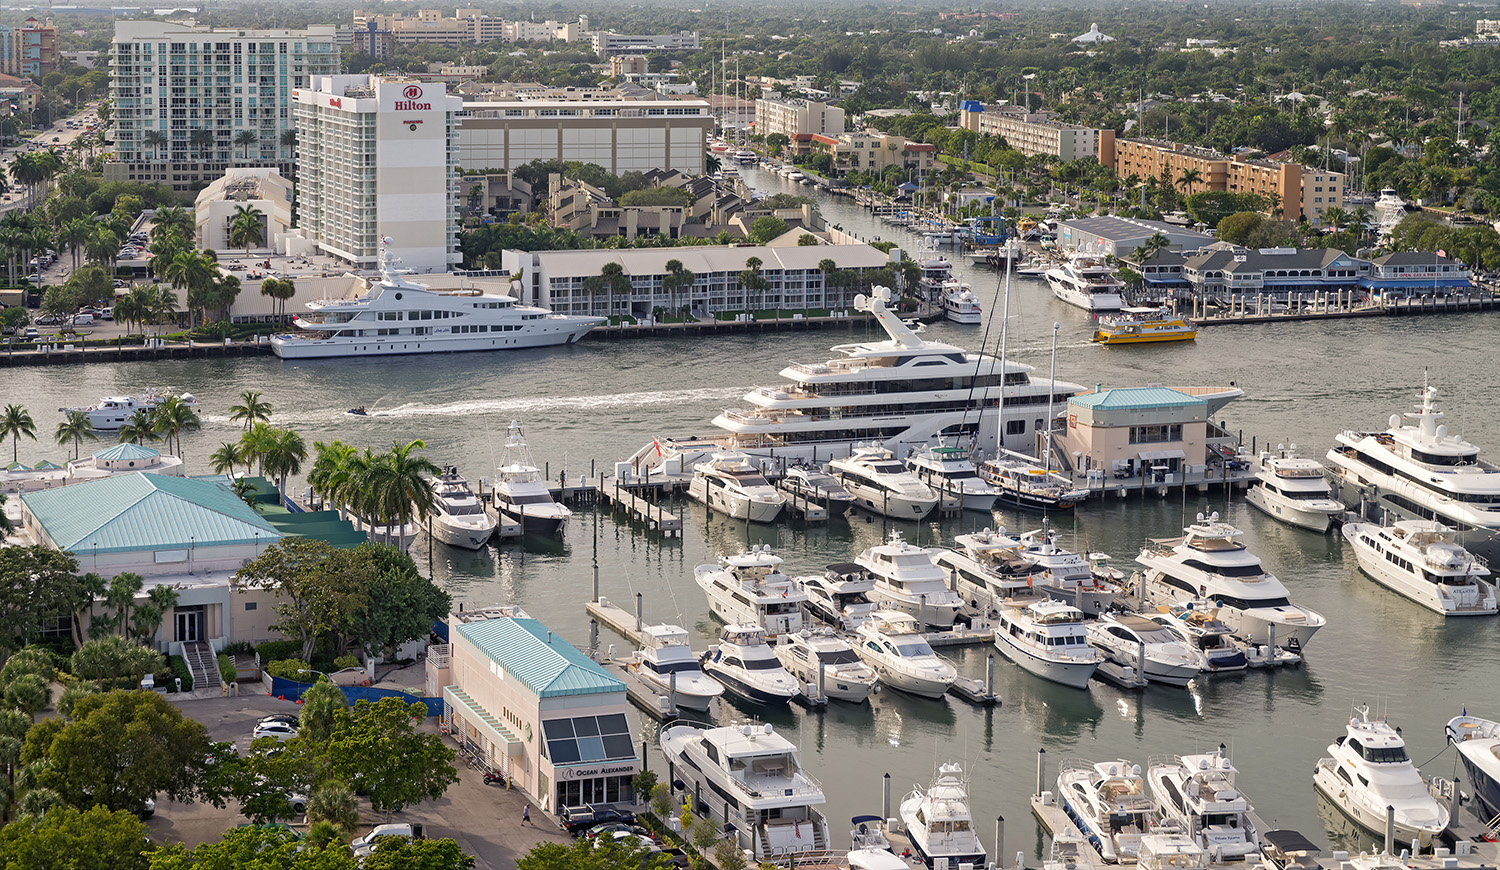 Pier Sixty-Six, Fort Lauderdale, FL - Claude Huot/Shutterstock